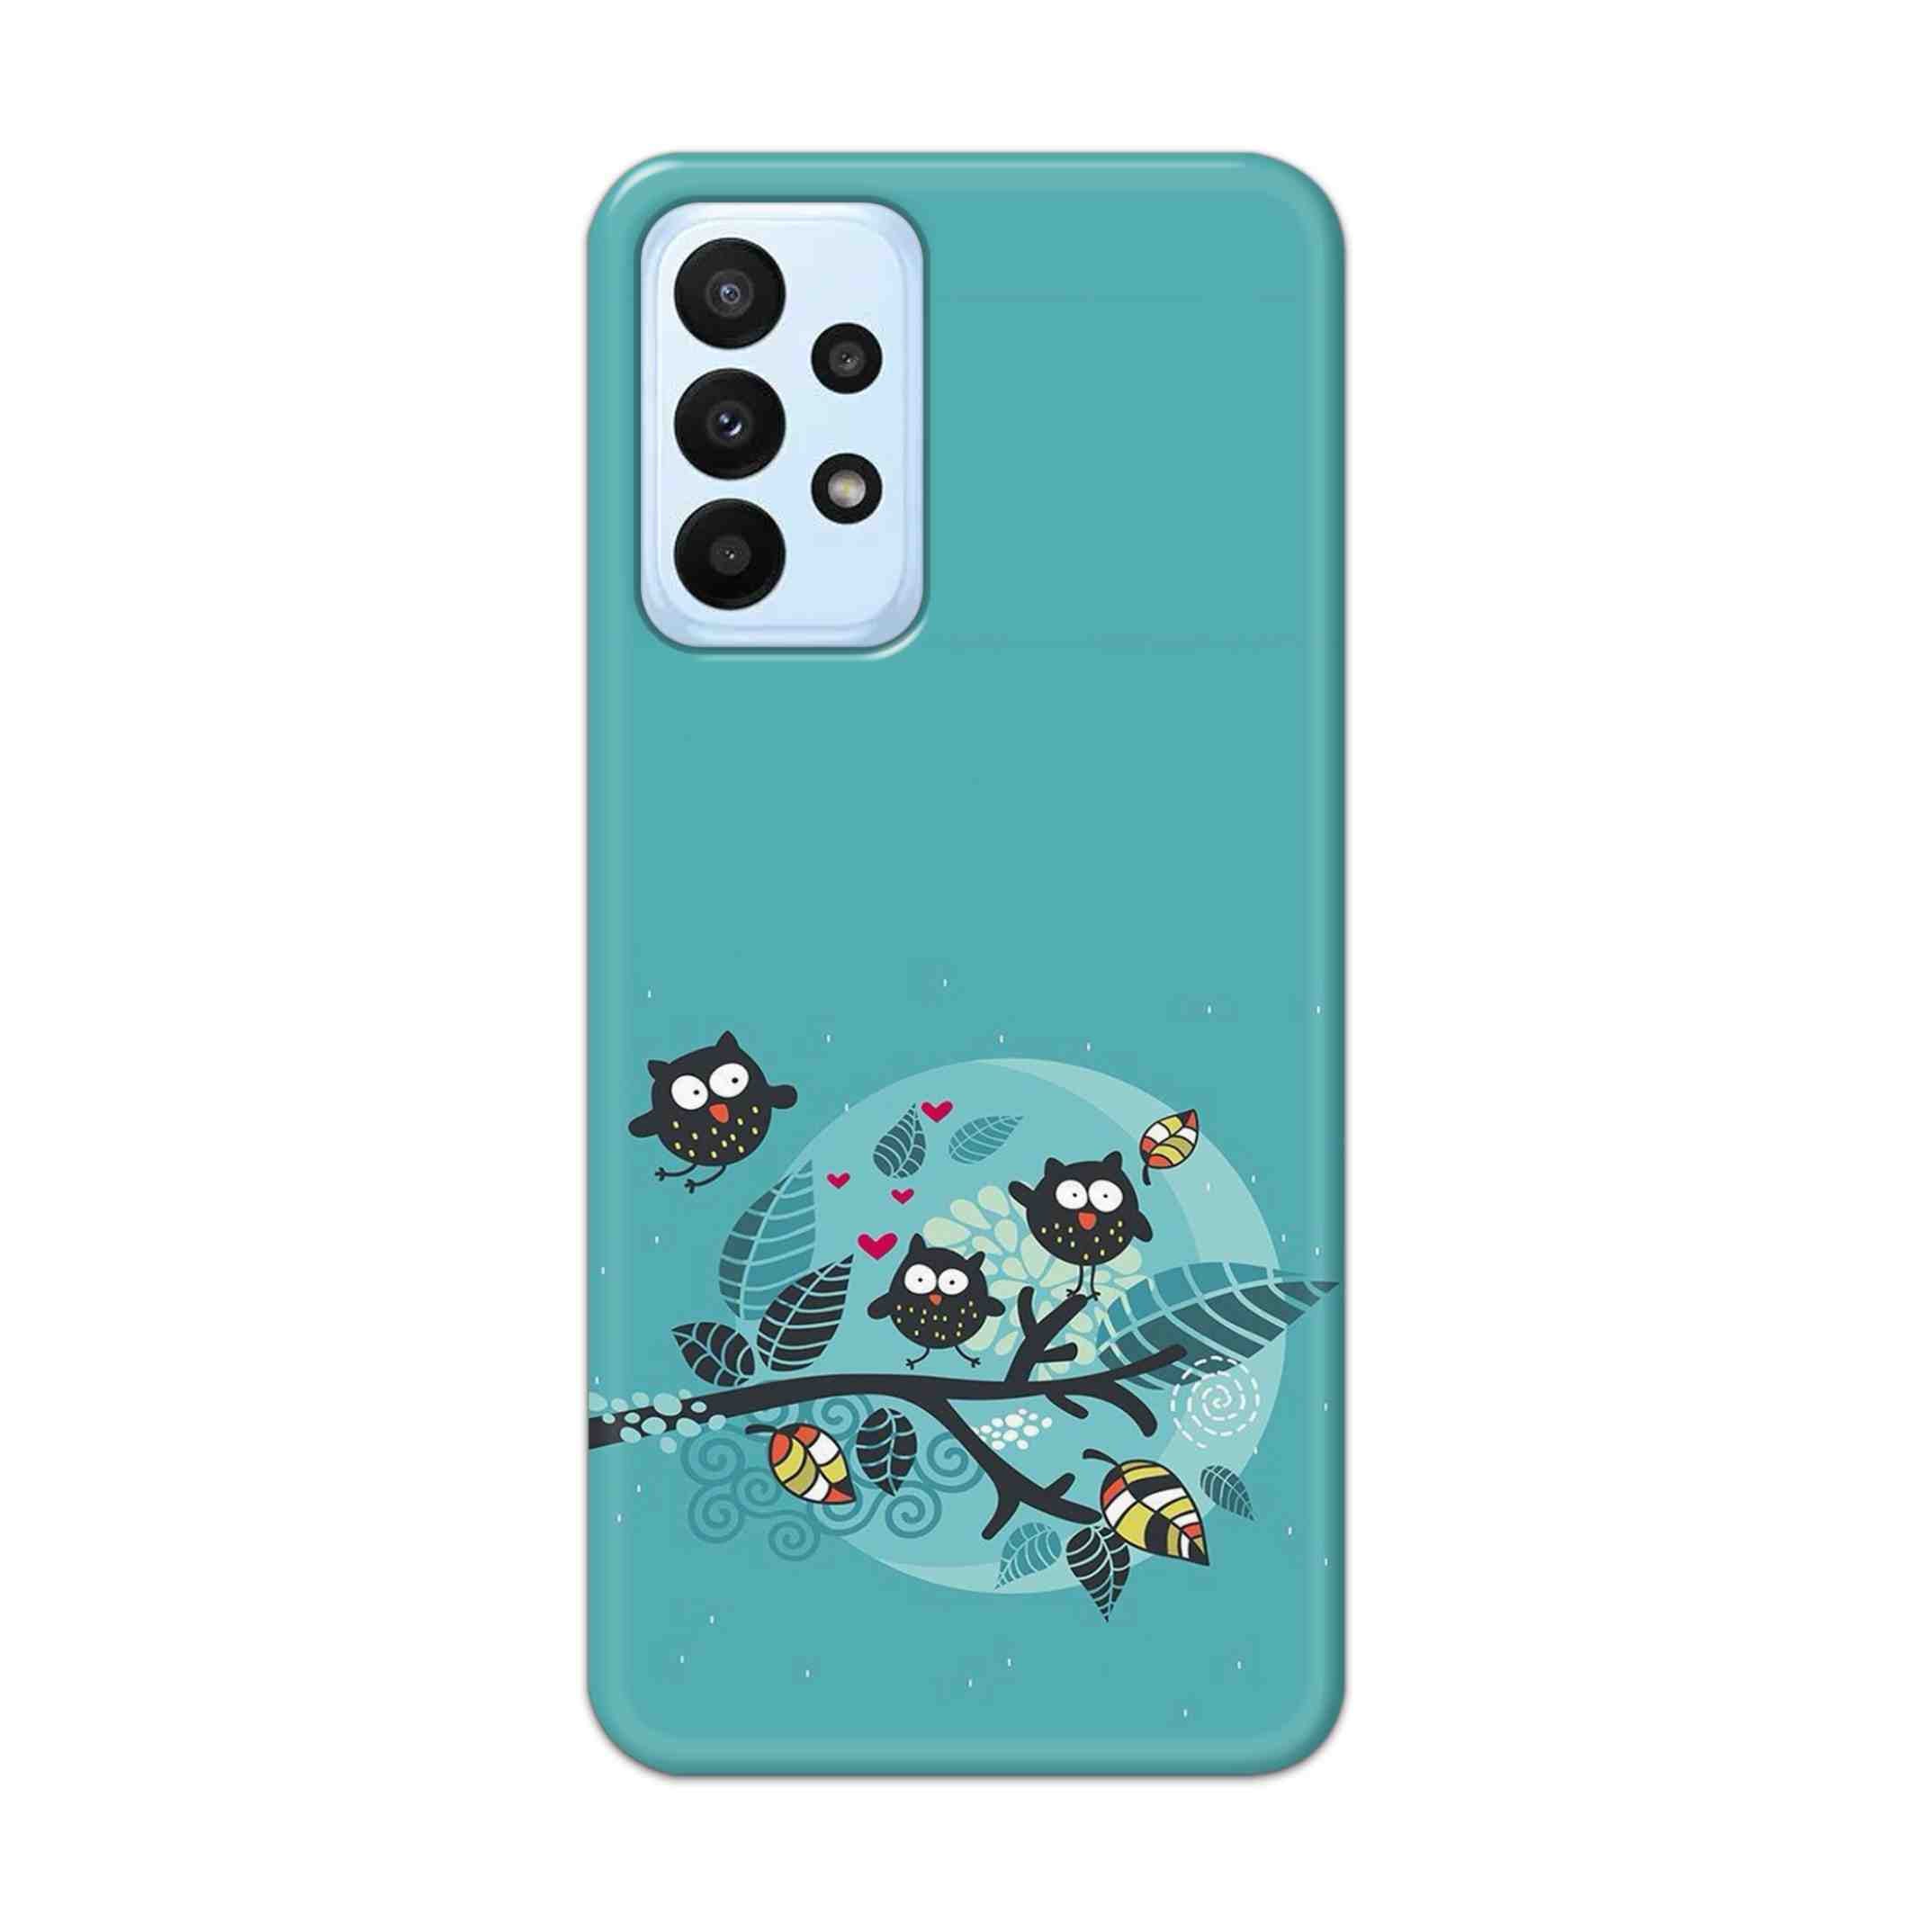 Buy Owl Hard Back Mobile Phone Case Cover For Samsung A23 Online